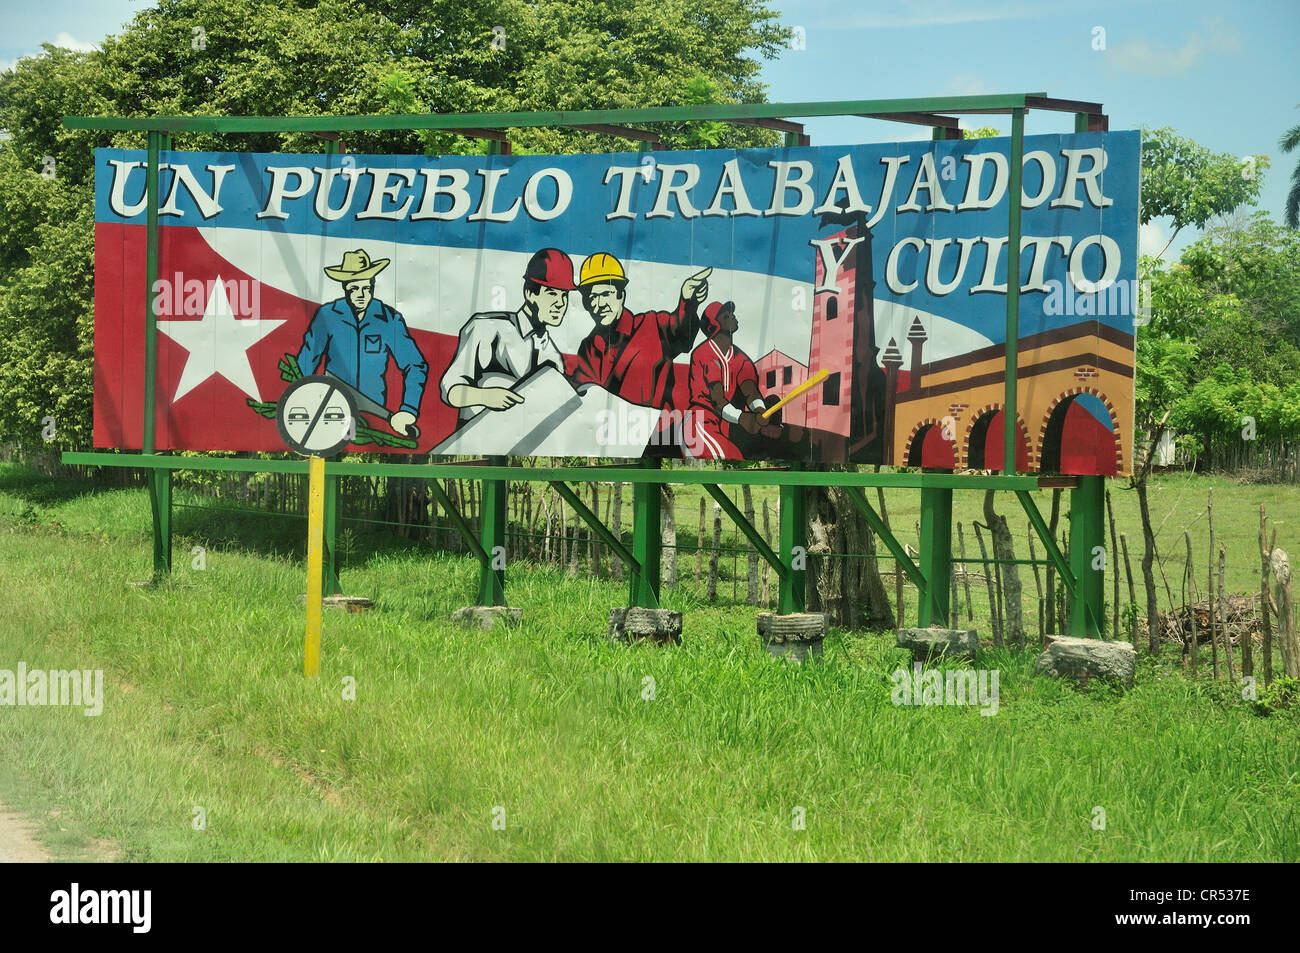 La propagande révolutionnaire, un pueblo trabajador y Culto, un peuple travailleur et civilisé, près de Las Tunas, Cuba, Caraïbes Banque D'Images